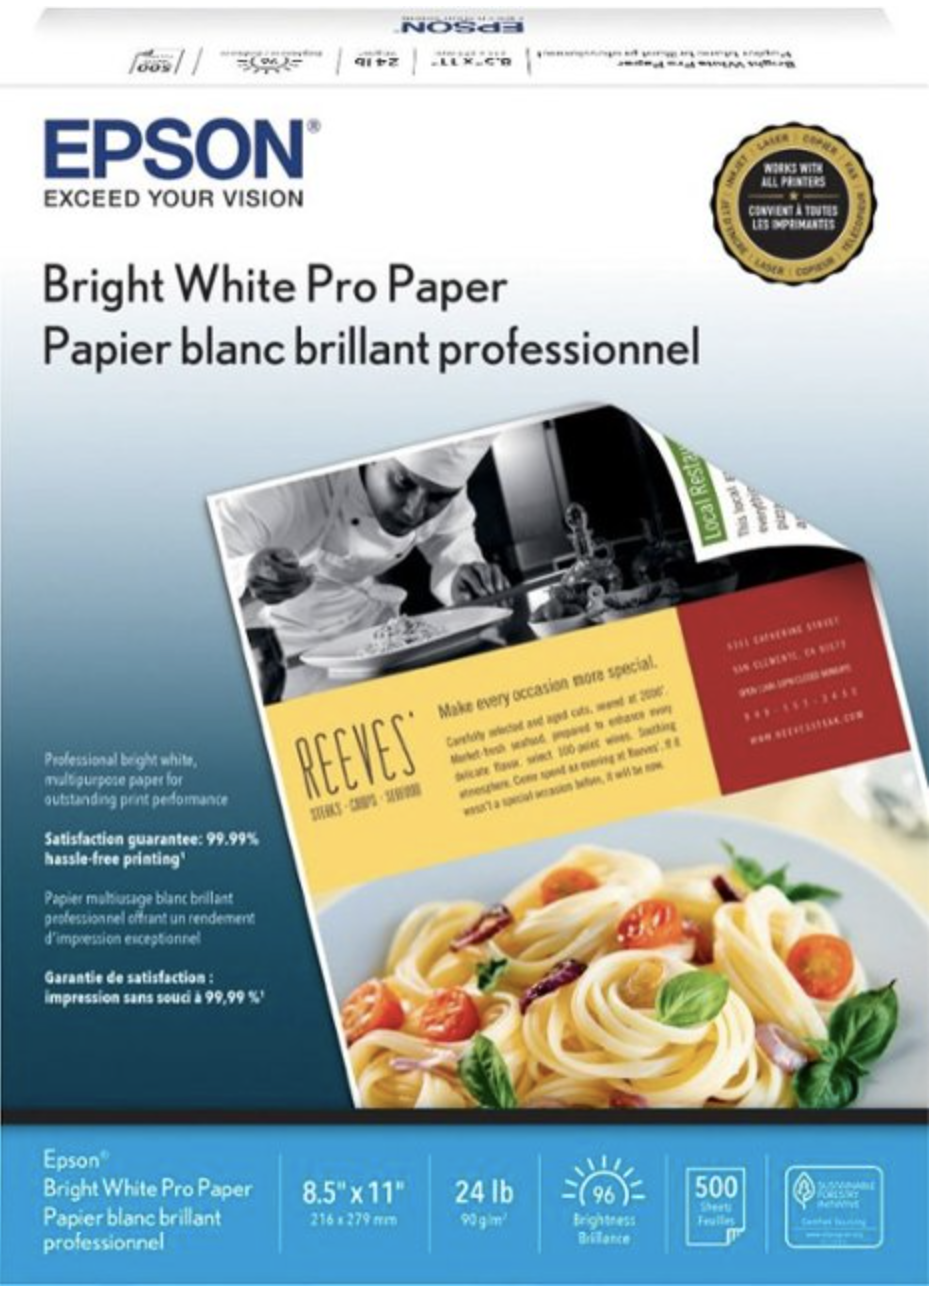 Commodity Multipurpose Copy Paper, 92 Bright, 20 lb, White, 8.5x11, 10  Reams, 5000 Sheet